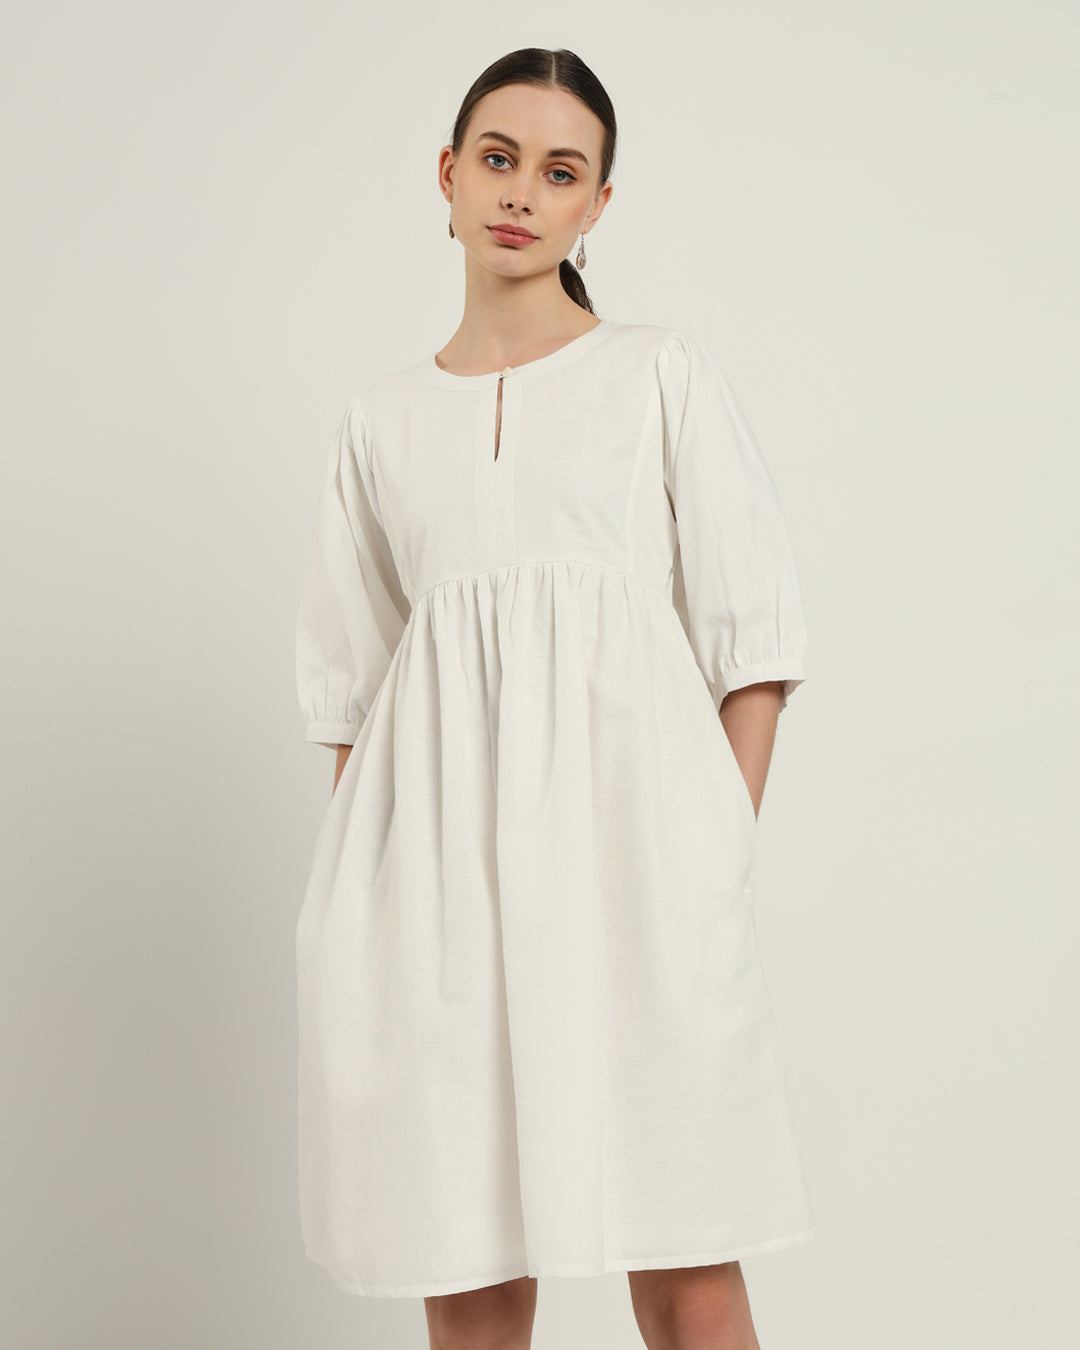 The Aira Daisy White Linen Dress